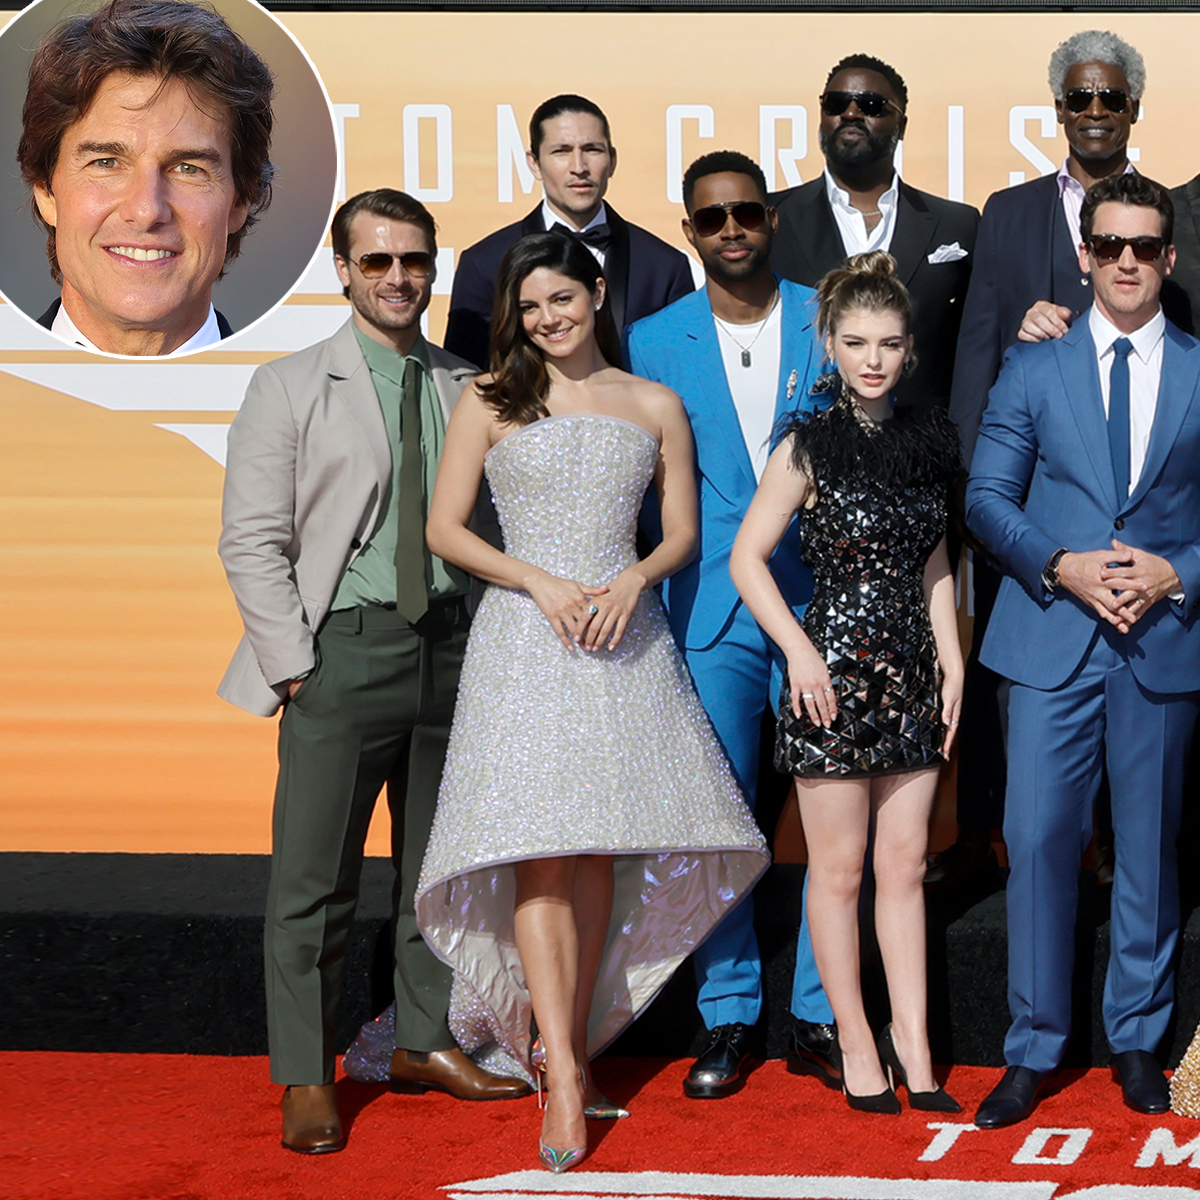 Top Gun: Maverick cast, where you've seen them before?